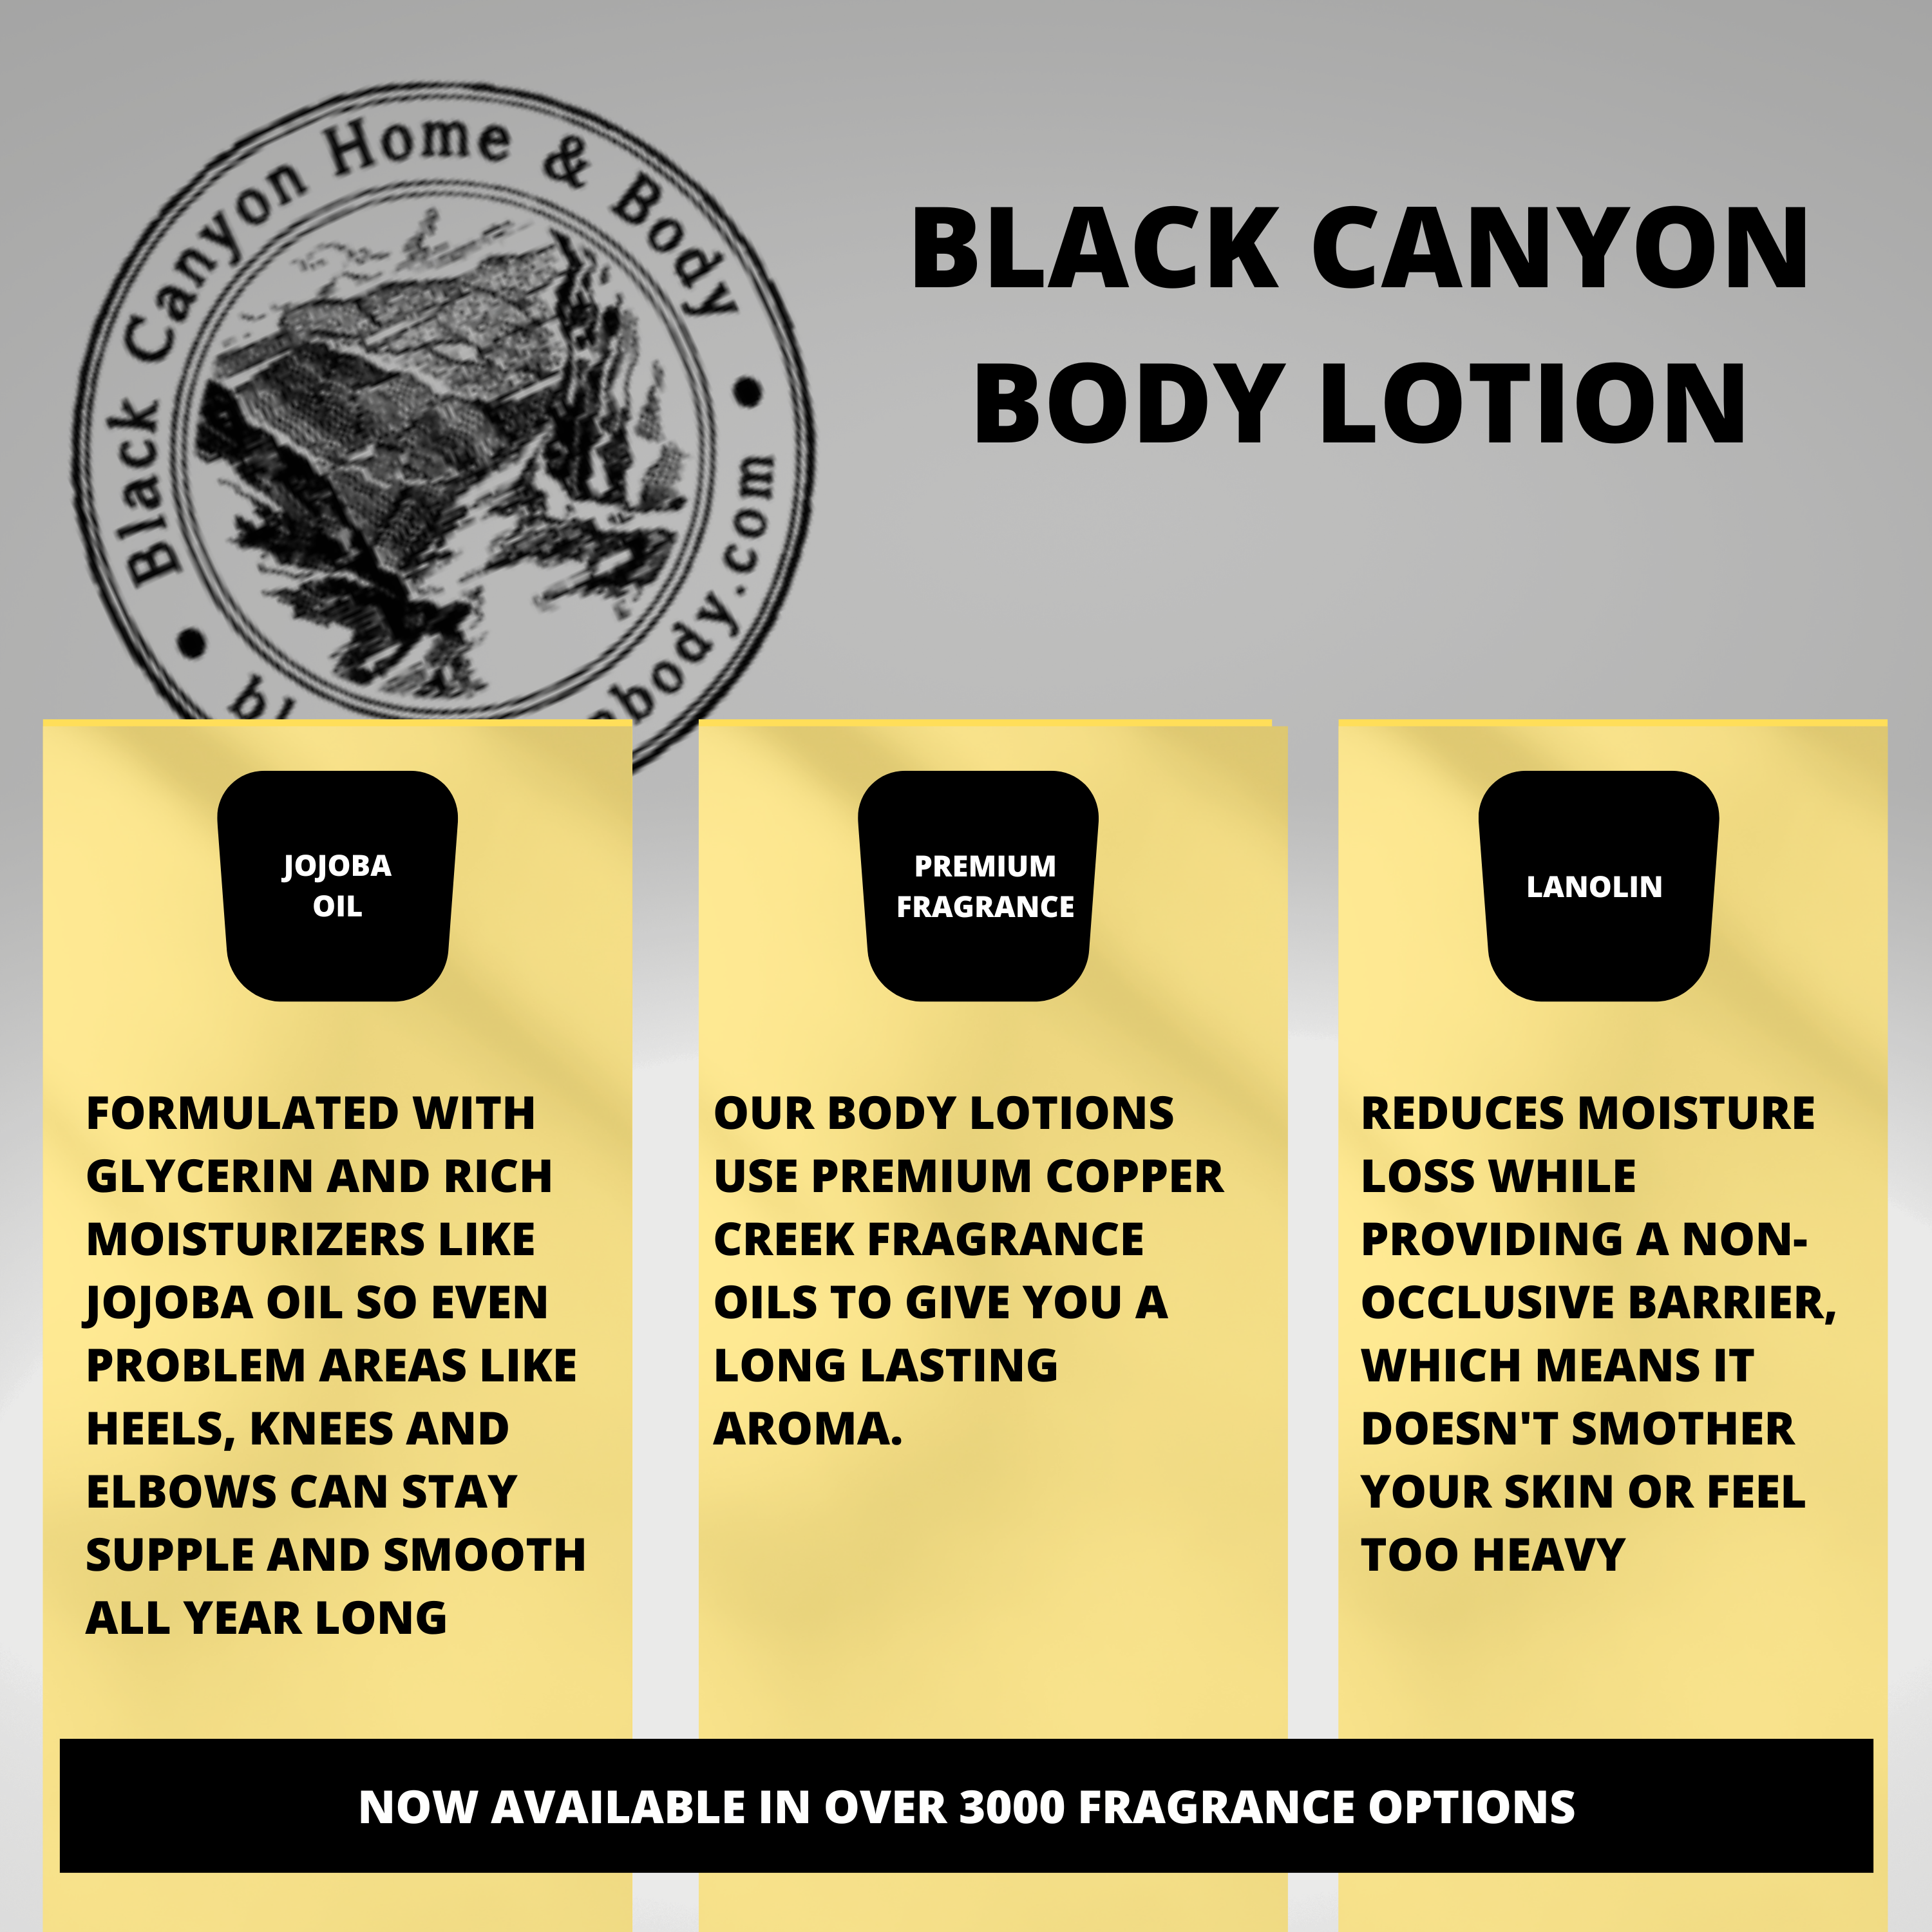 Black Canyon Banana Cream Pie Scented Luxury Body Lotion with Lanolin and Jojoba Oil